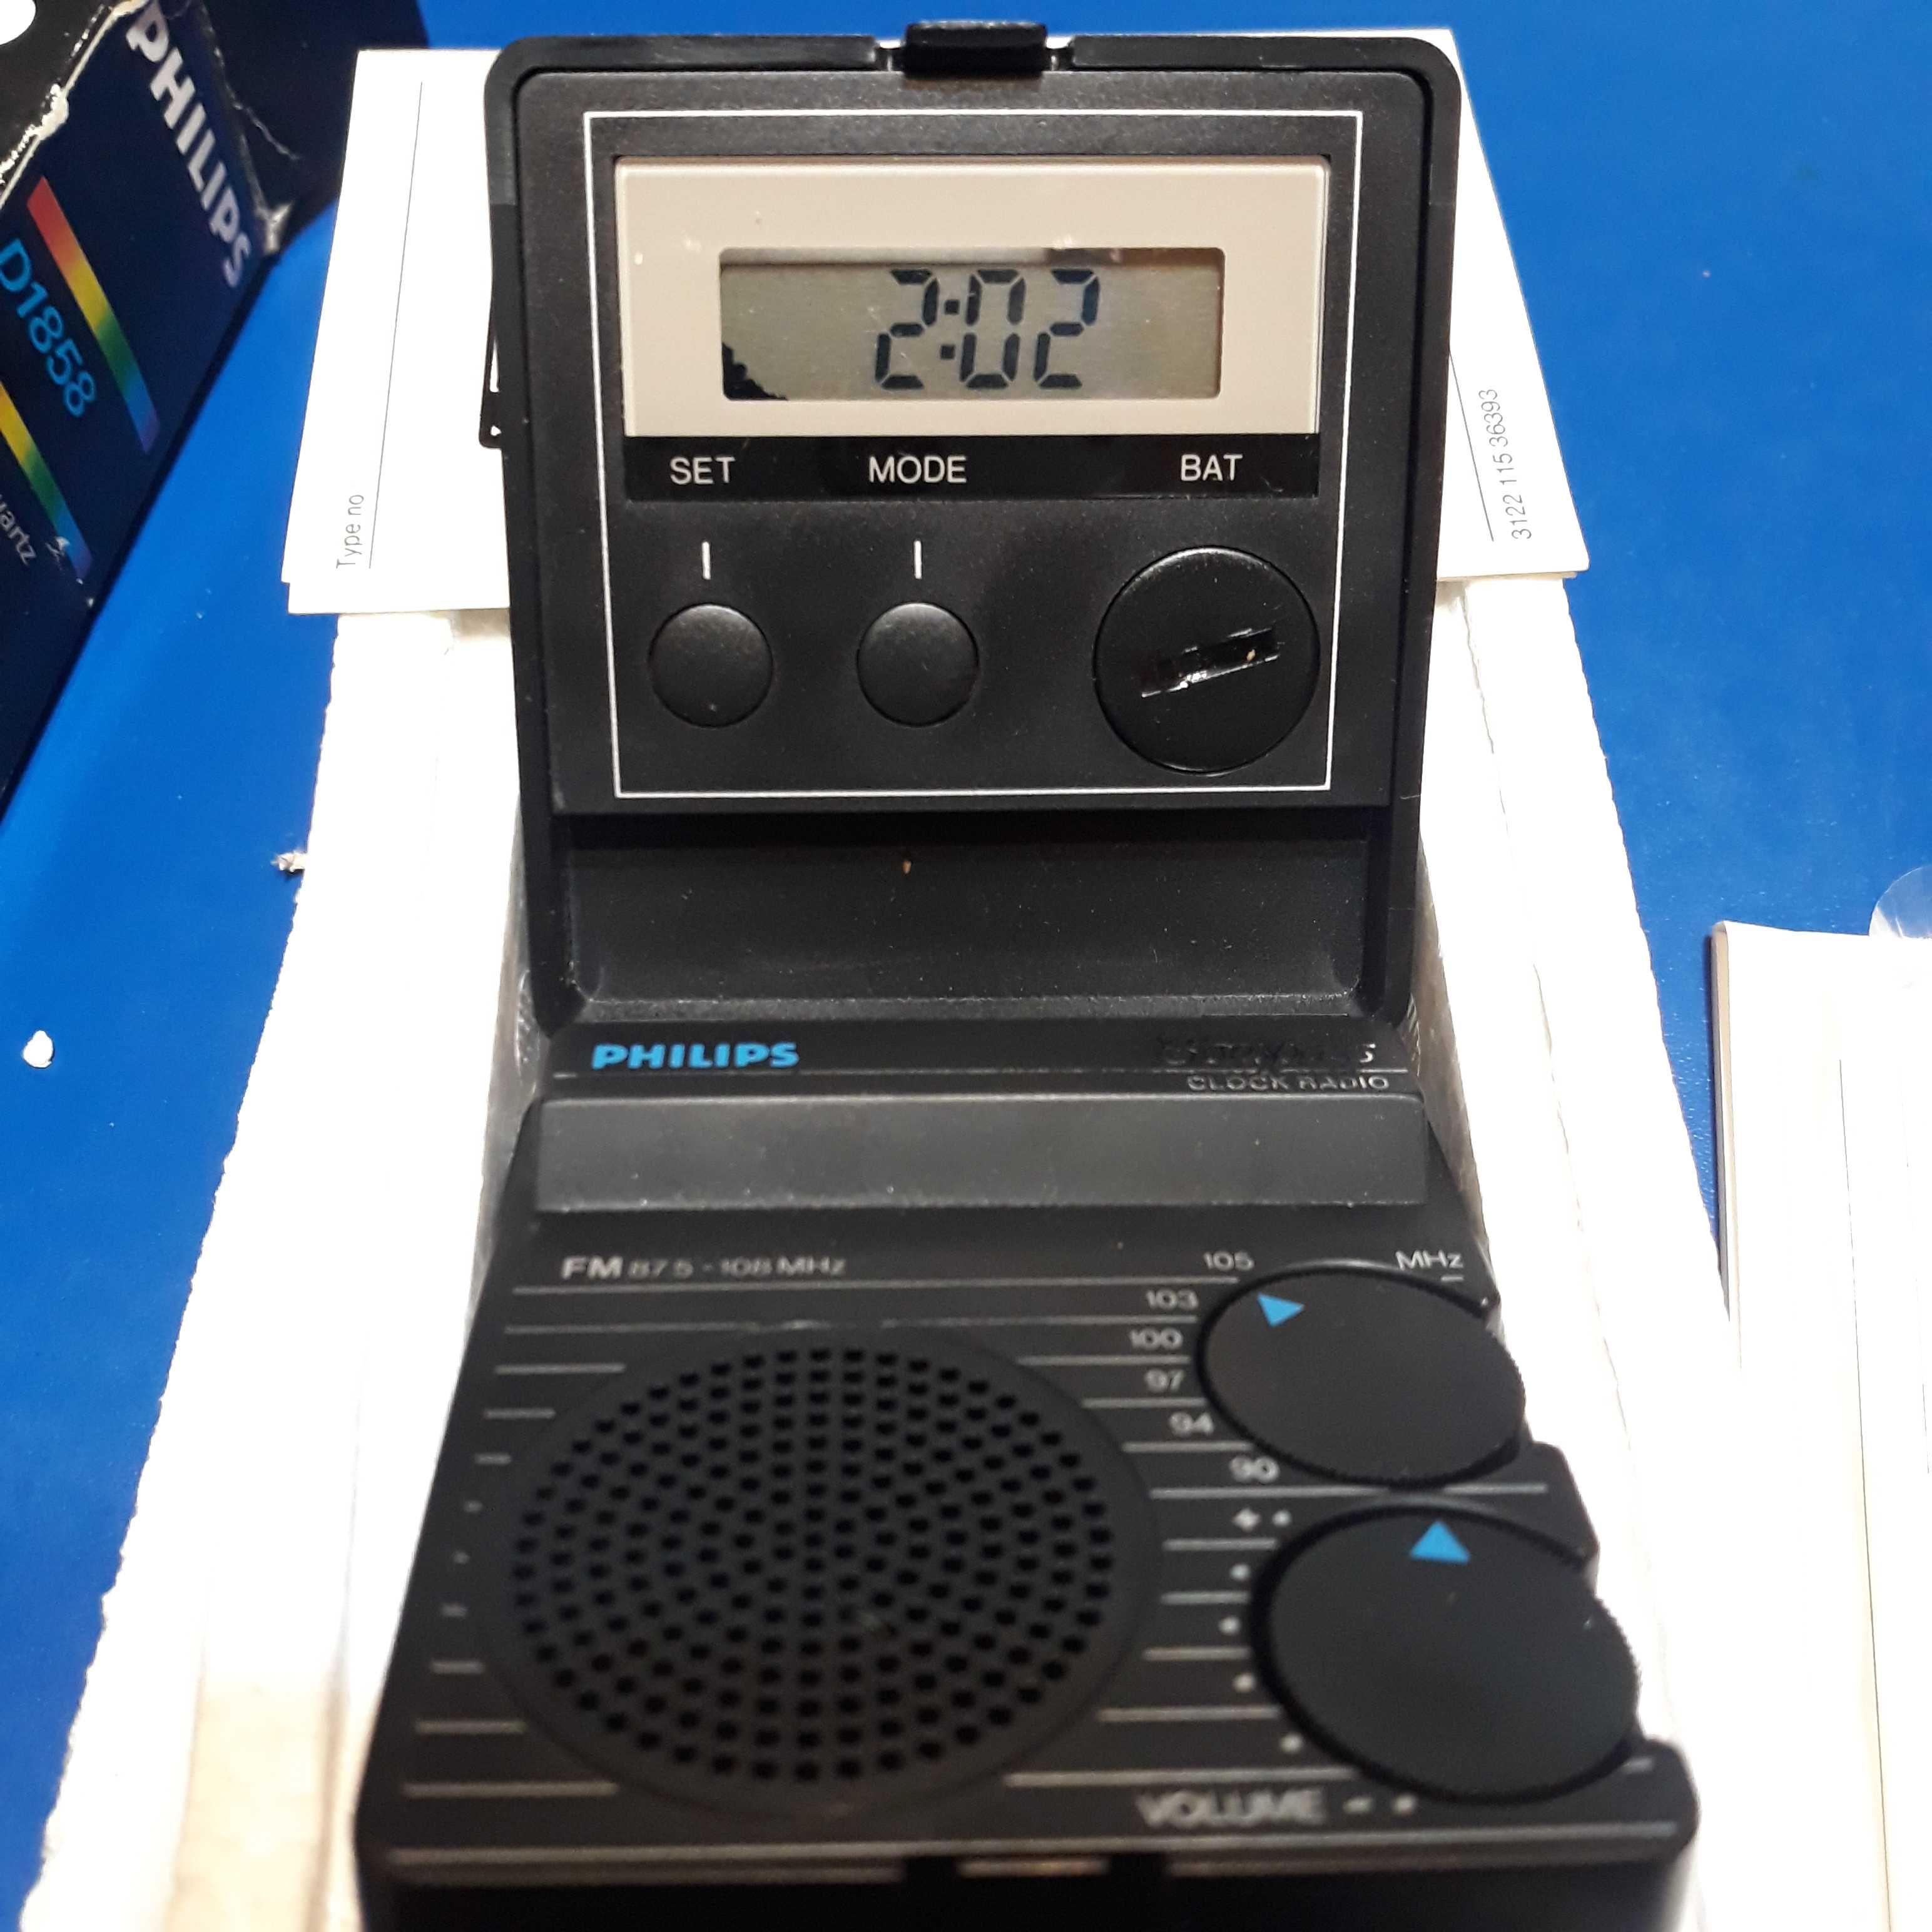 Radio / ceas PHILIPS -model D1858 micro radio  / compass